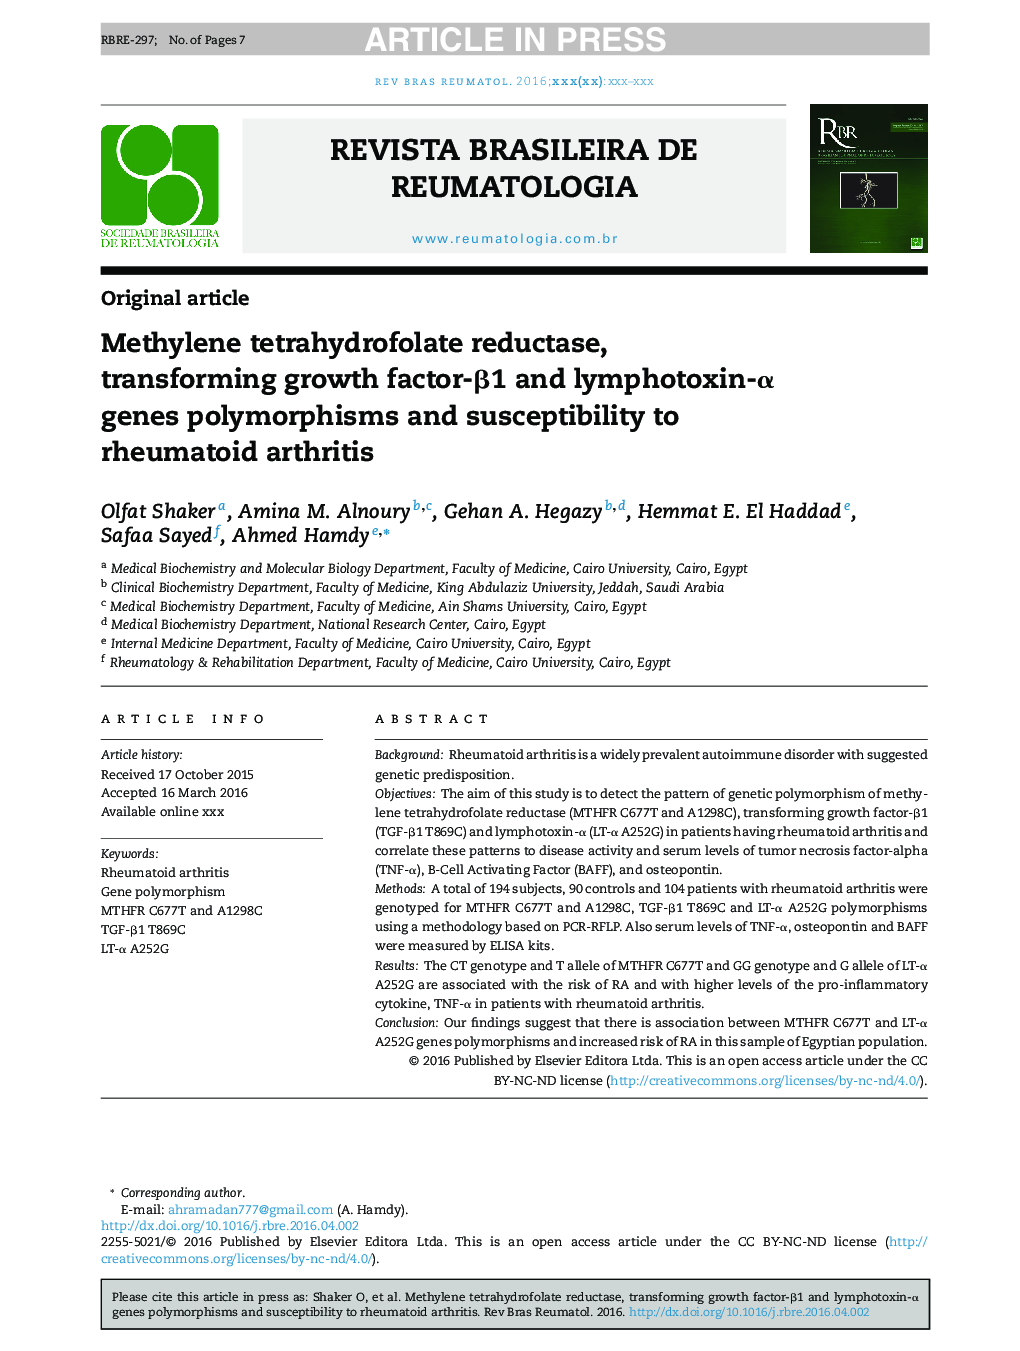 Methylene tetrahydrofolate reductase, transforming growth factor-Î²1 and lymphotoxin-Î± genes polymorphisms and susceptibility to rheumatoid arthritis